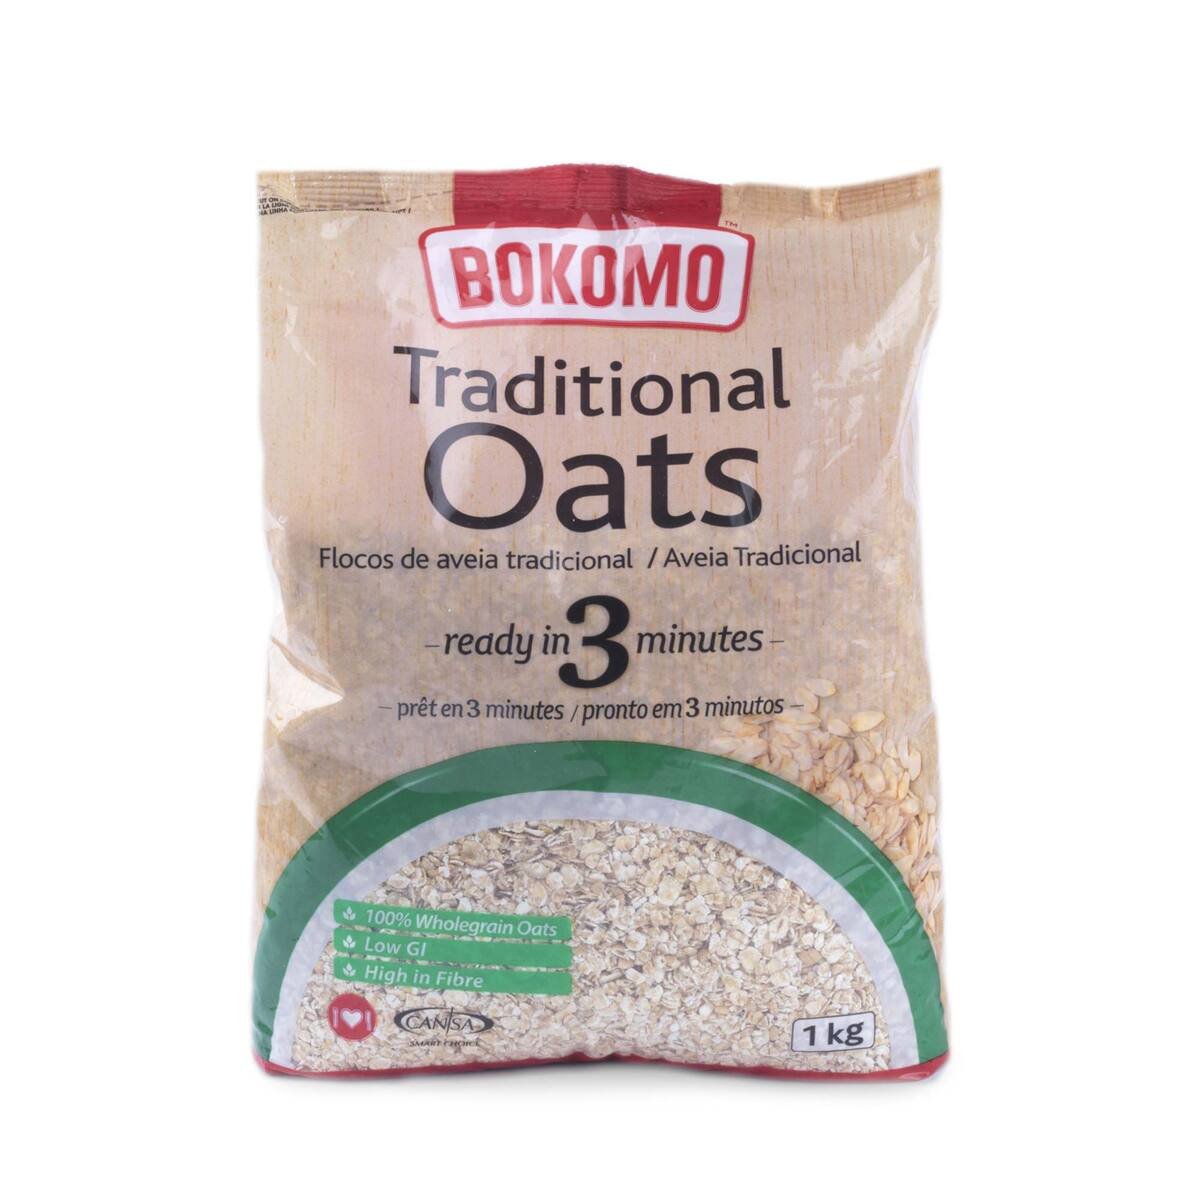 Bokomo Traditional Oats 1 kg